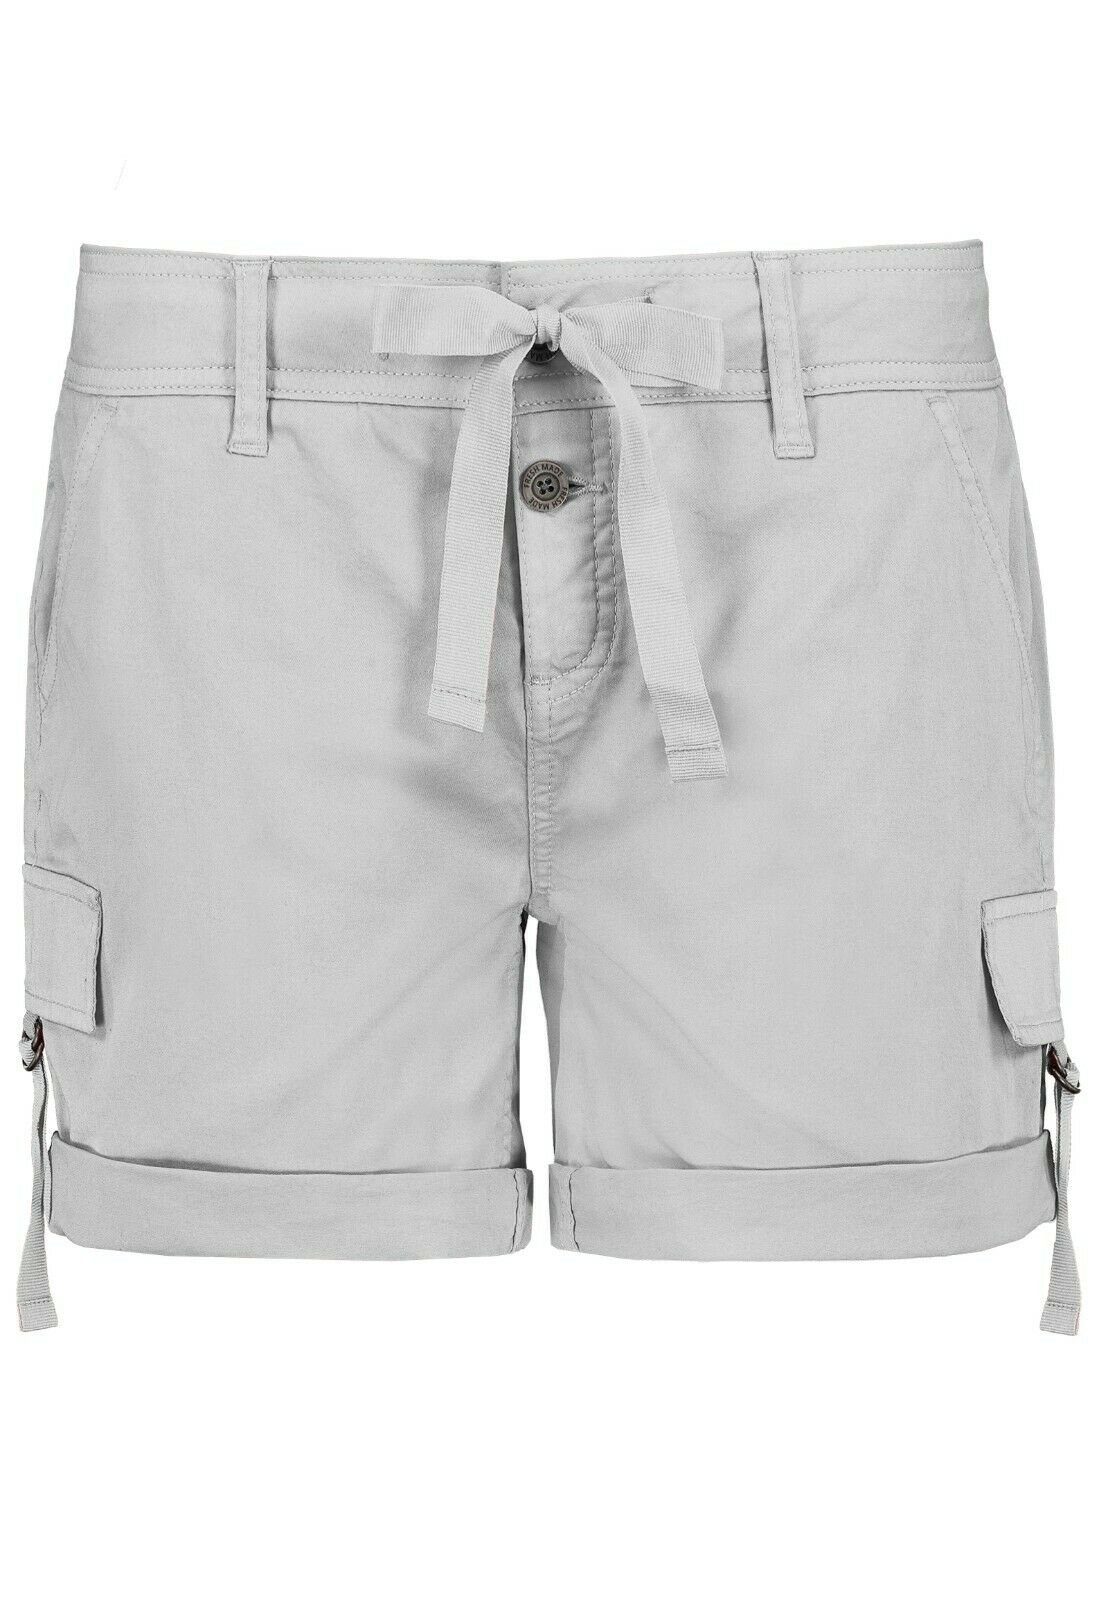 Hose Shorts Fresh Kurze Hotpants Short Made Sommer Bermuda Bermudas